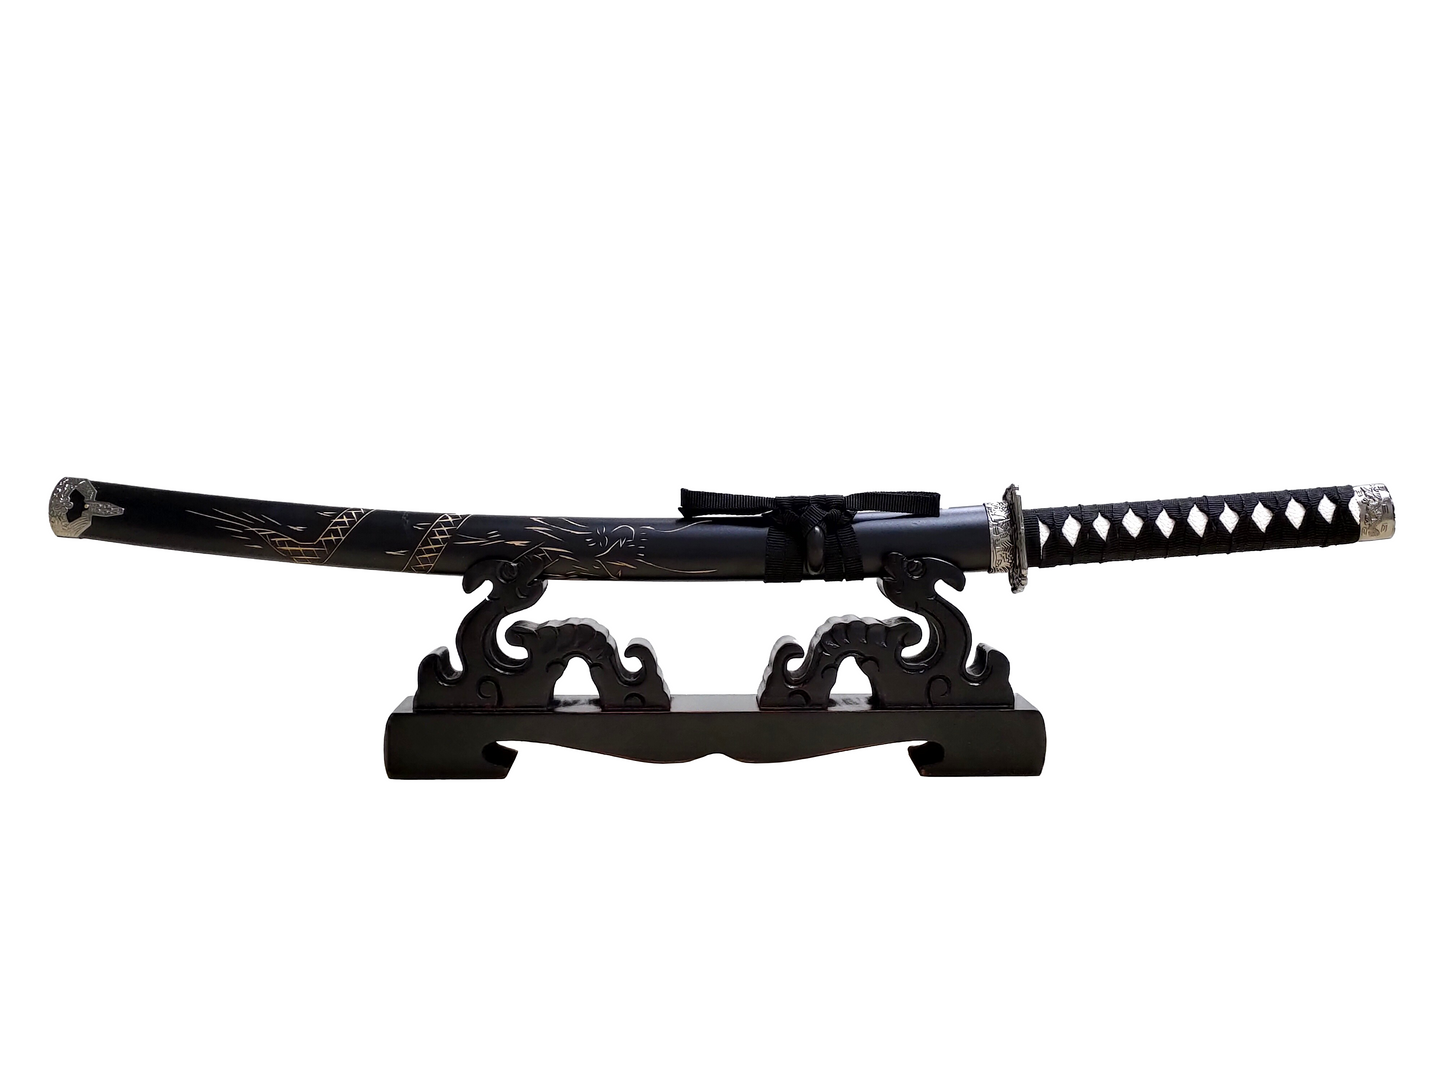 BLACK DRAGON PREMIUM SINGLE SWORD DISPLAY STAND FOR SAMURAI & KATANA SWORDS